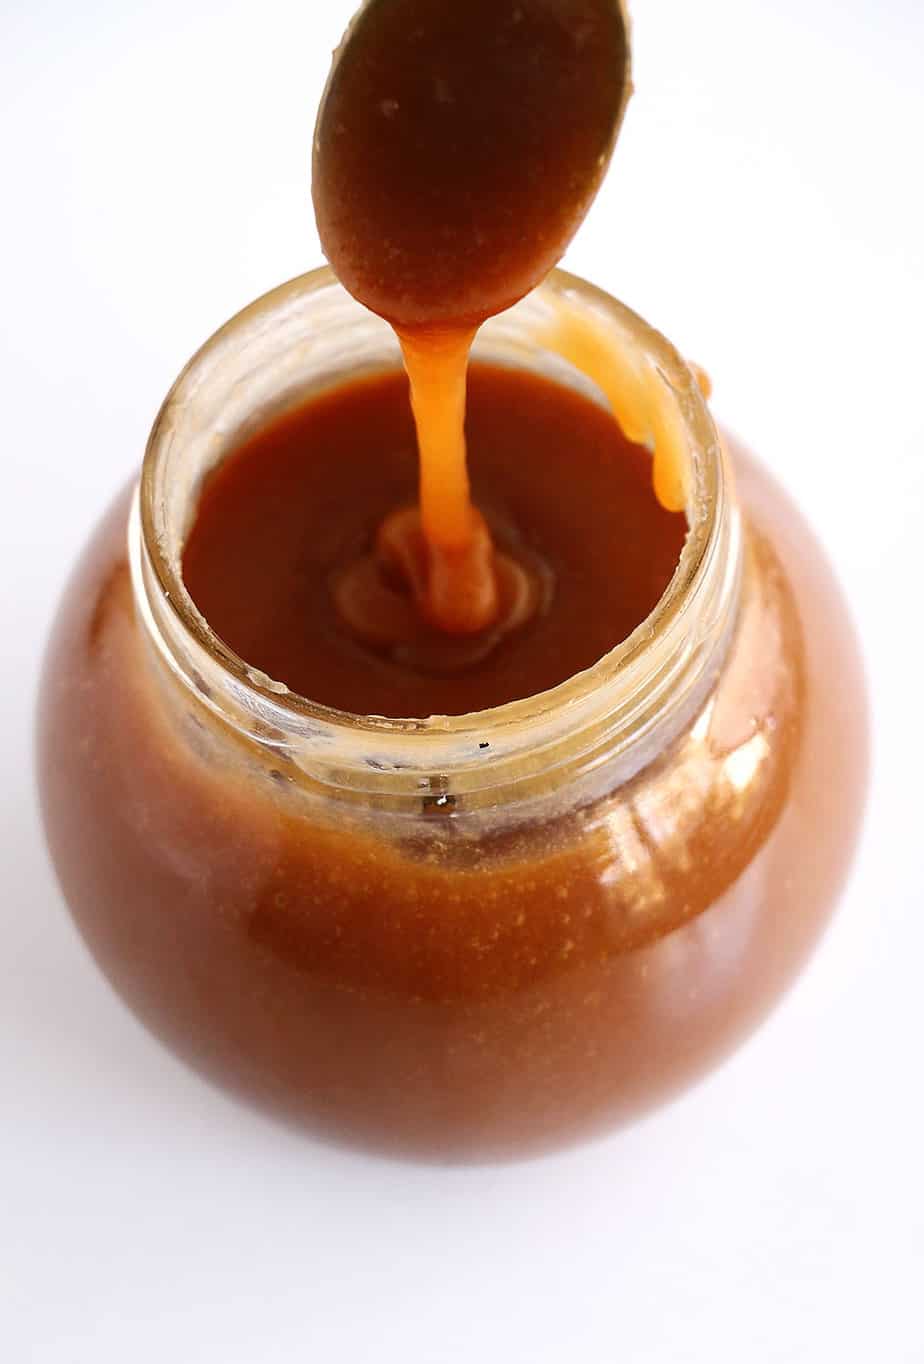 Salted caramel in a glass jar.